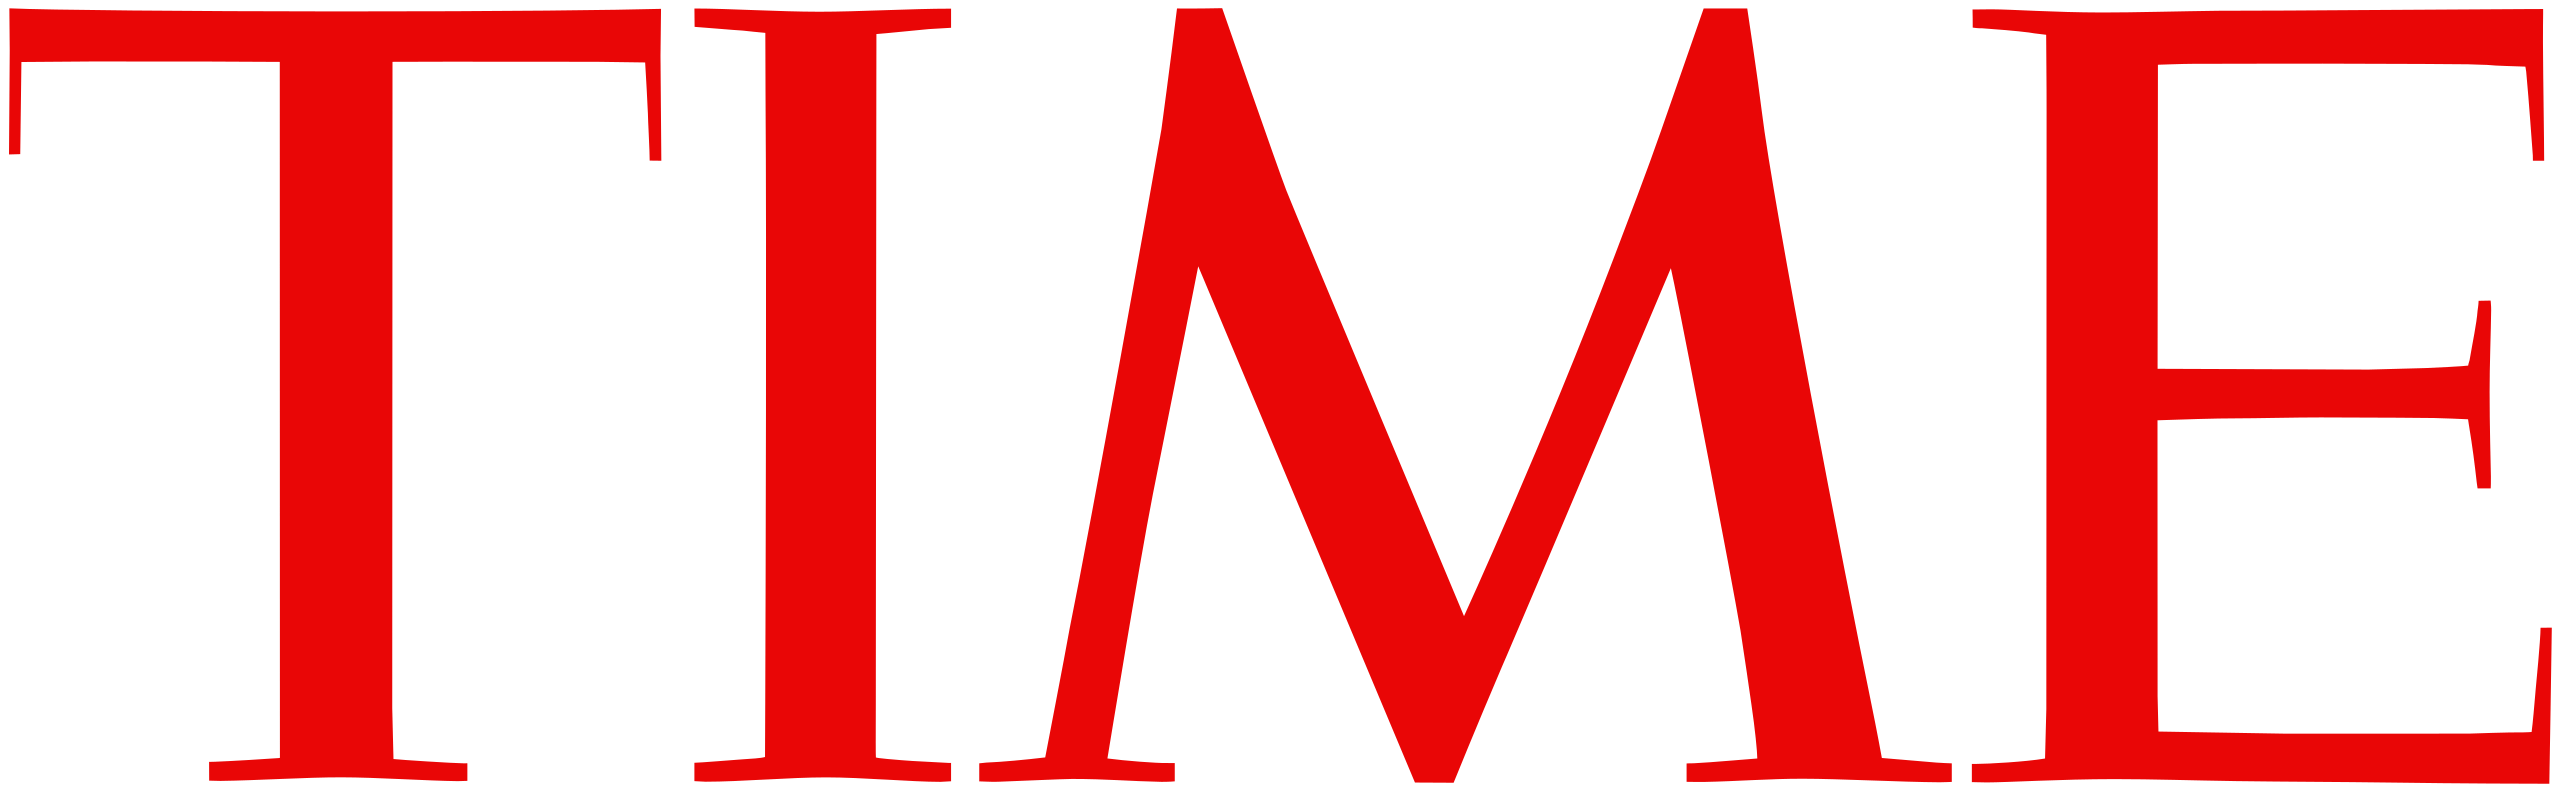 Time-Magazine-logo